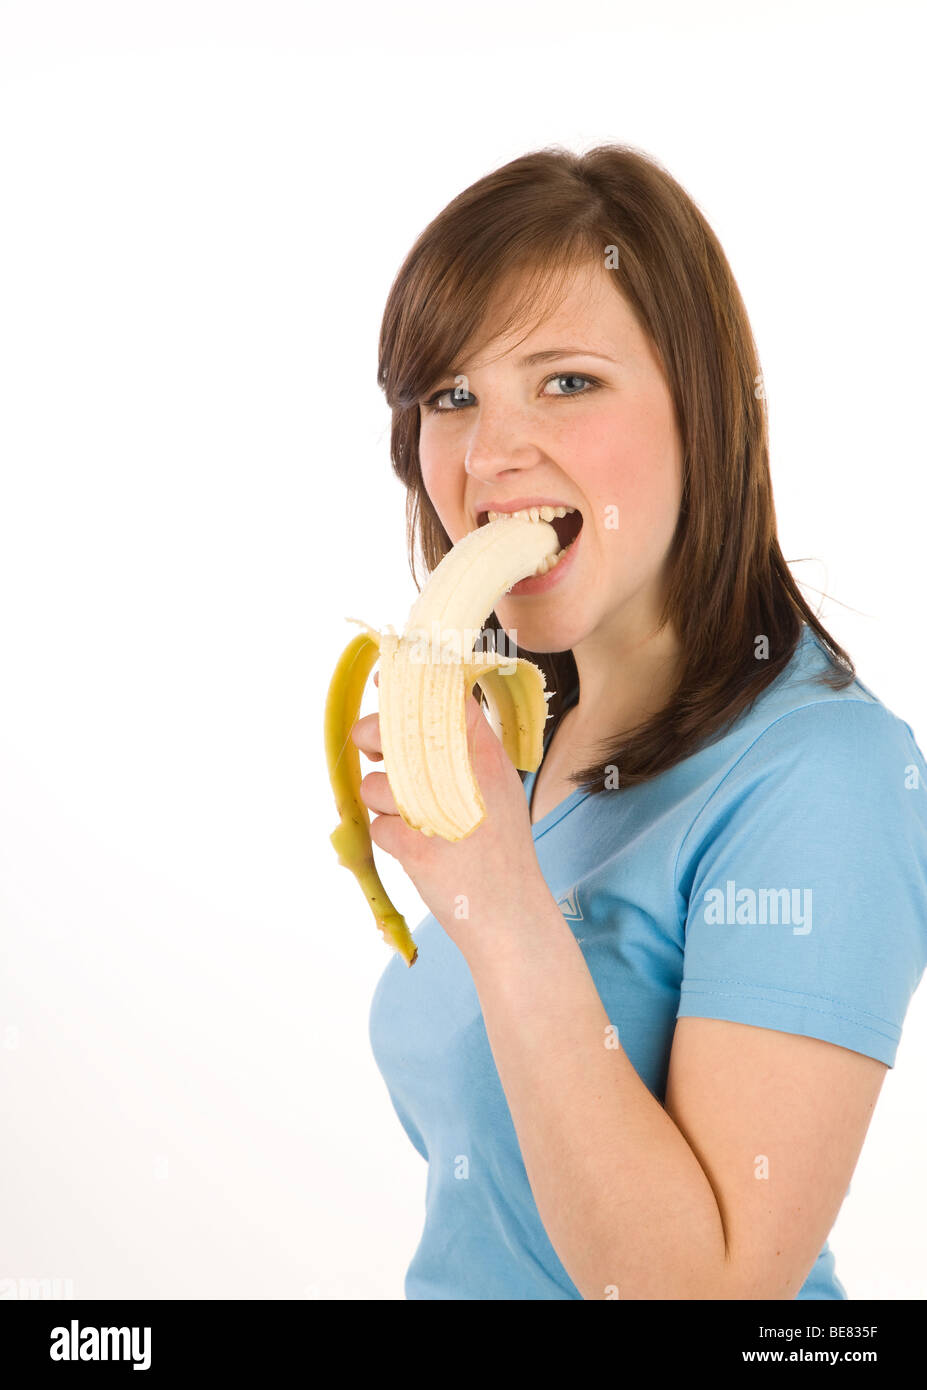 Young woman biting into a banana Stock Photo